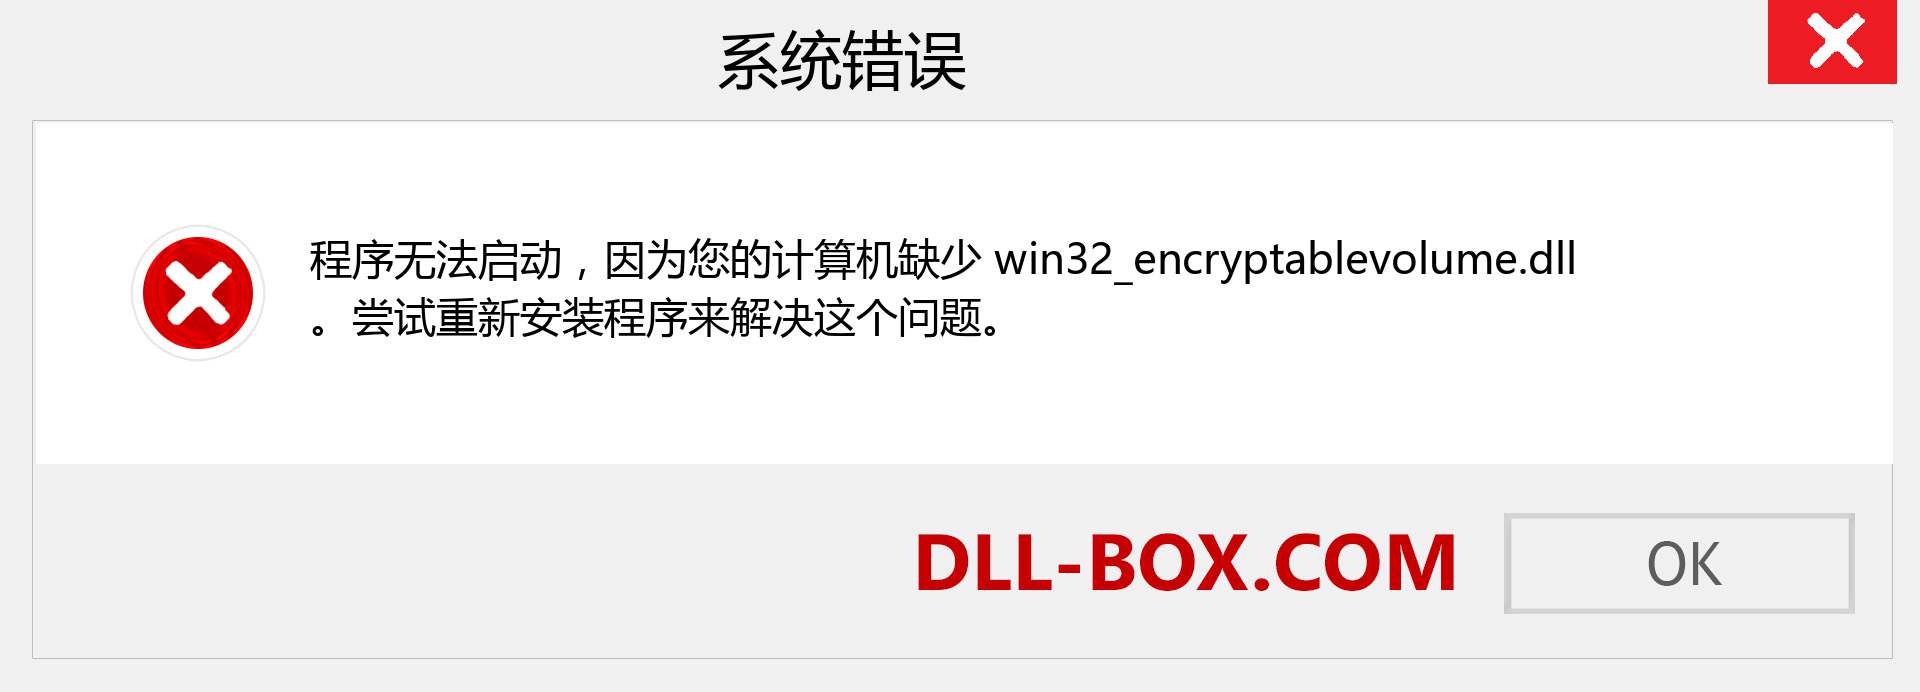 win32_encryptablevolume.dll 文件丢失？。 适用于 Windows 7、8、10 的下载 - 修复 Windows、照片、图像上的 win32_encryptablevolume dll 丢失错误